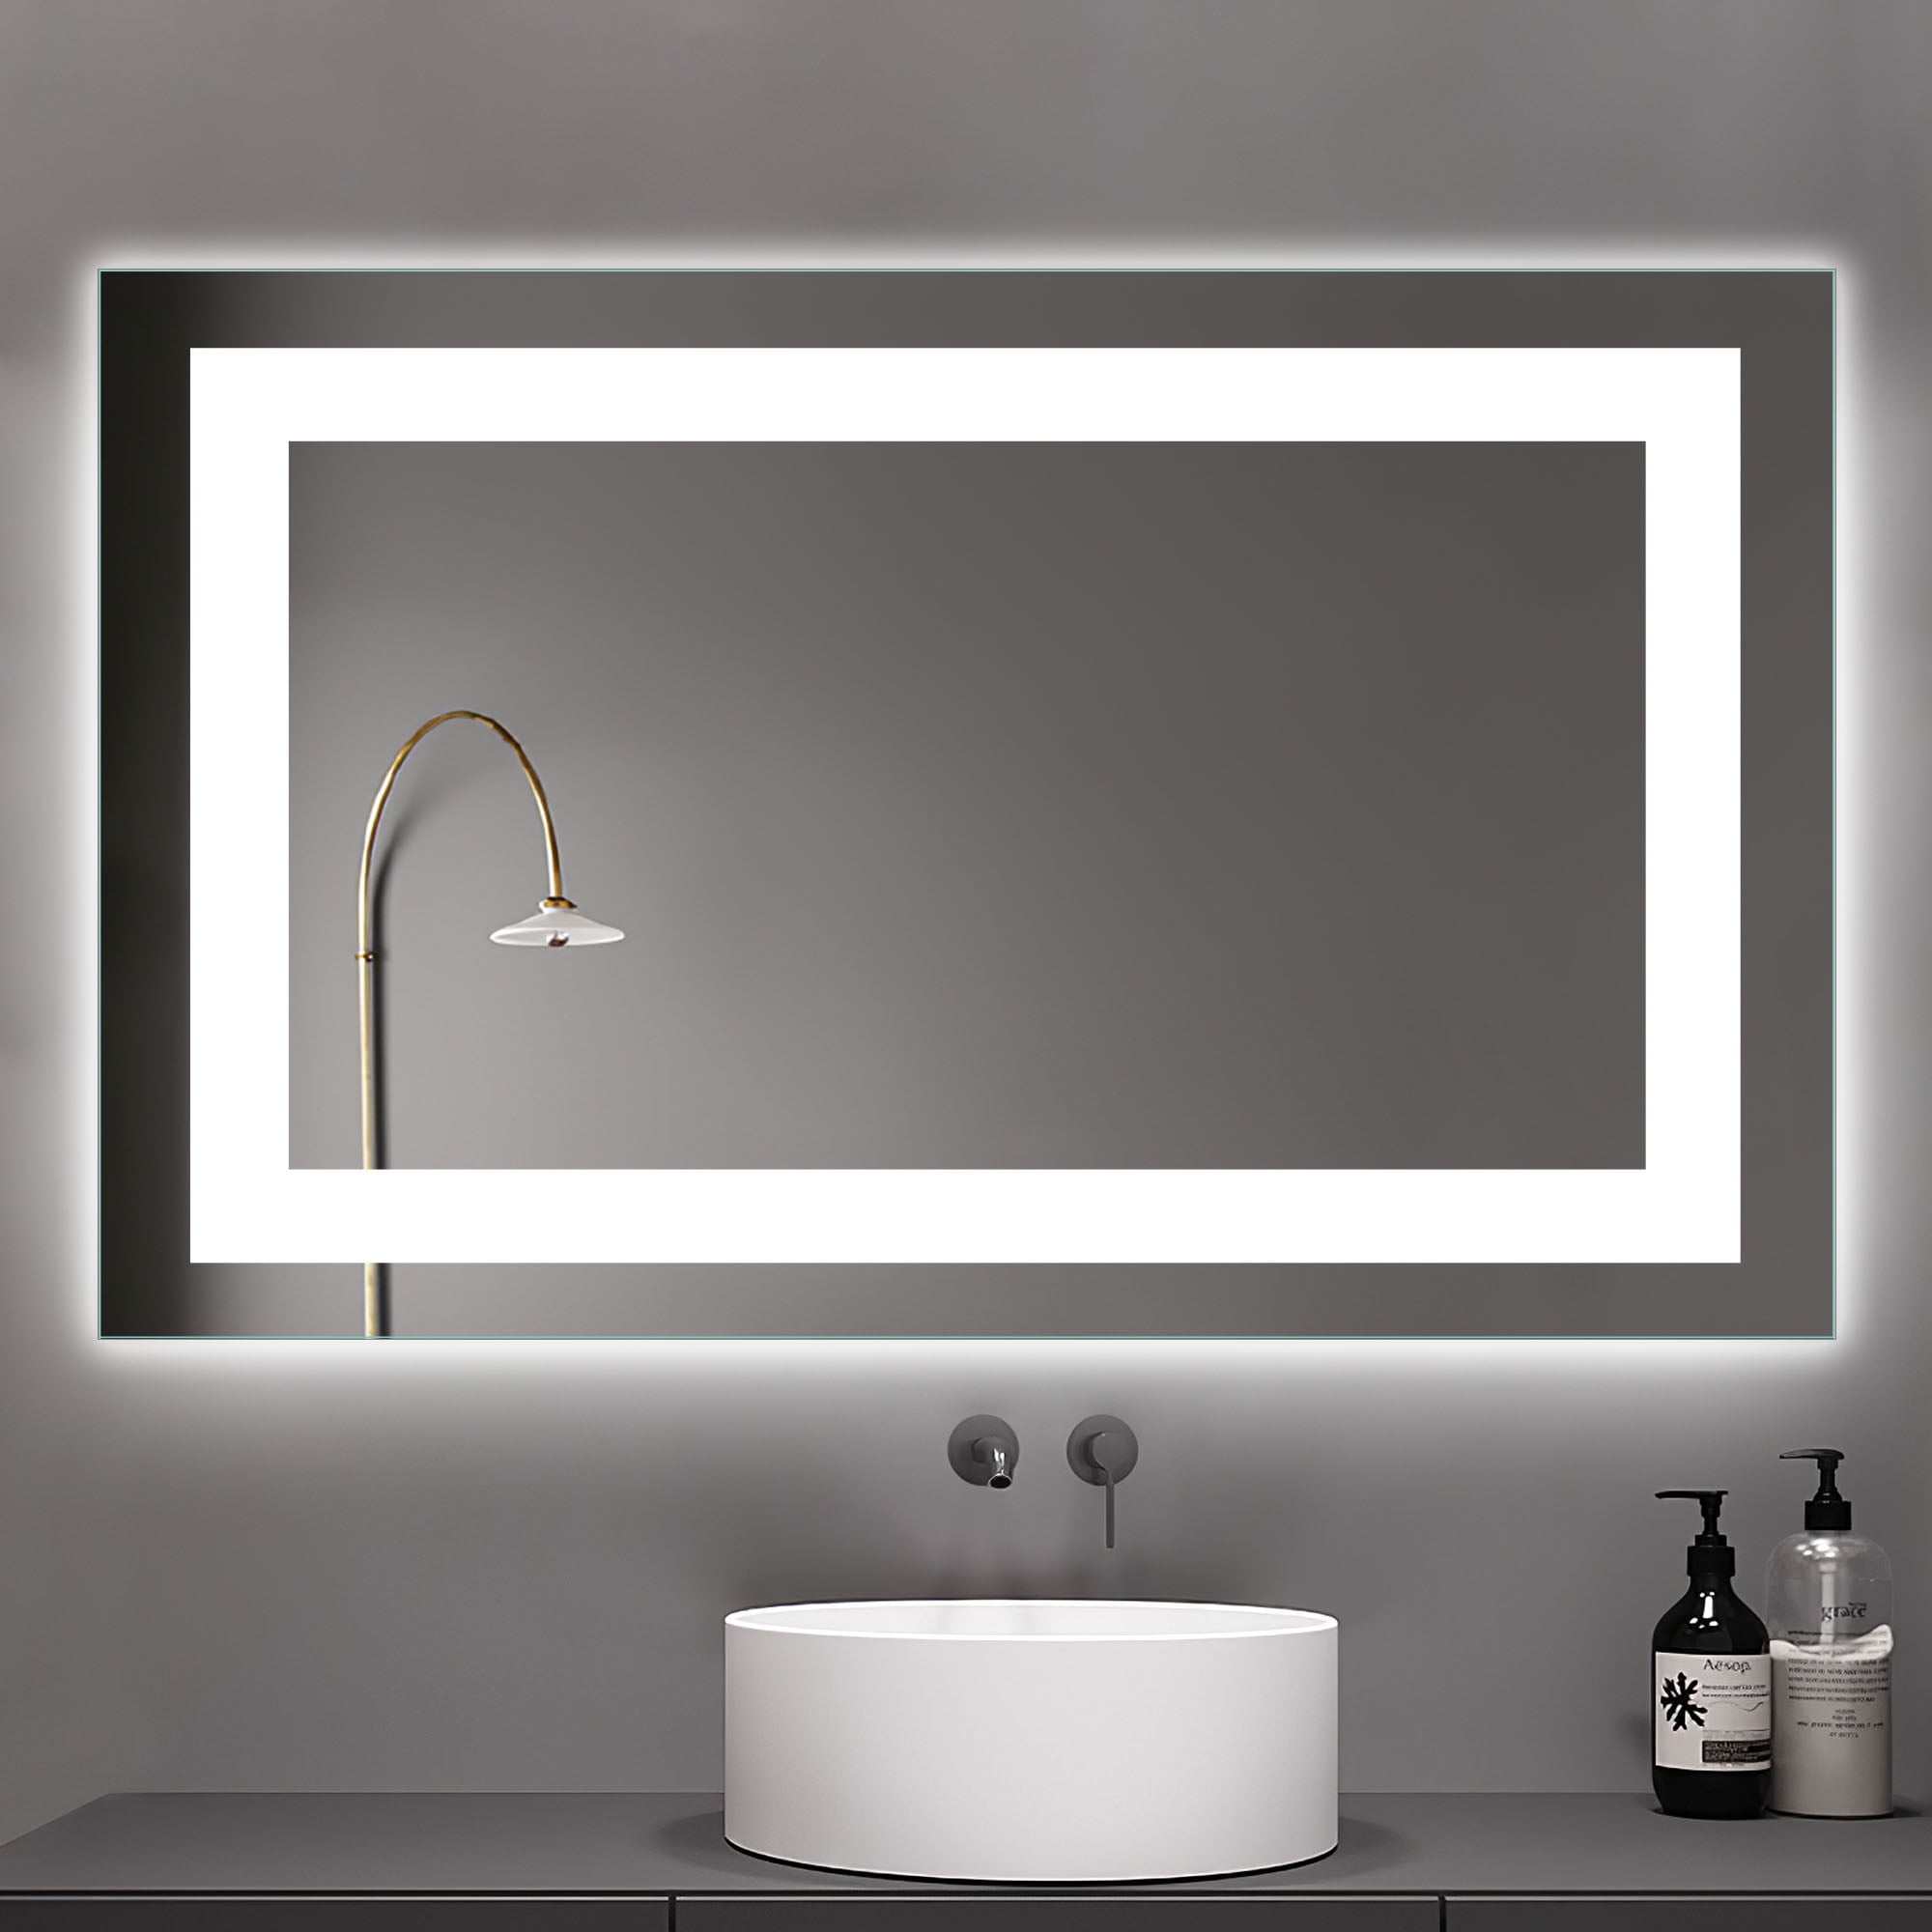 Details about   Retro LED Wall Sconces Light Mirror Front Lamp Fixture European style Bathroom 